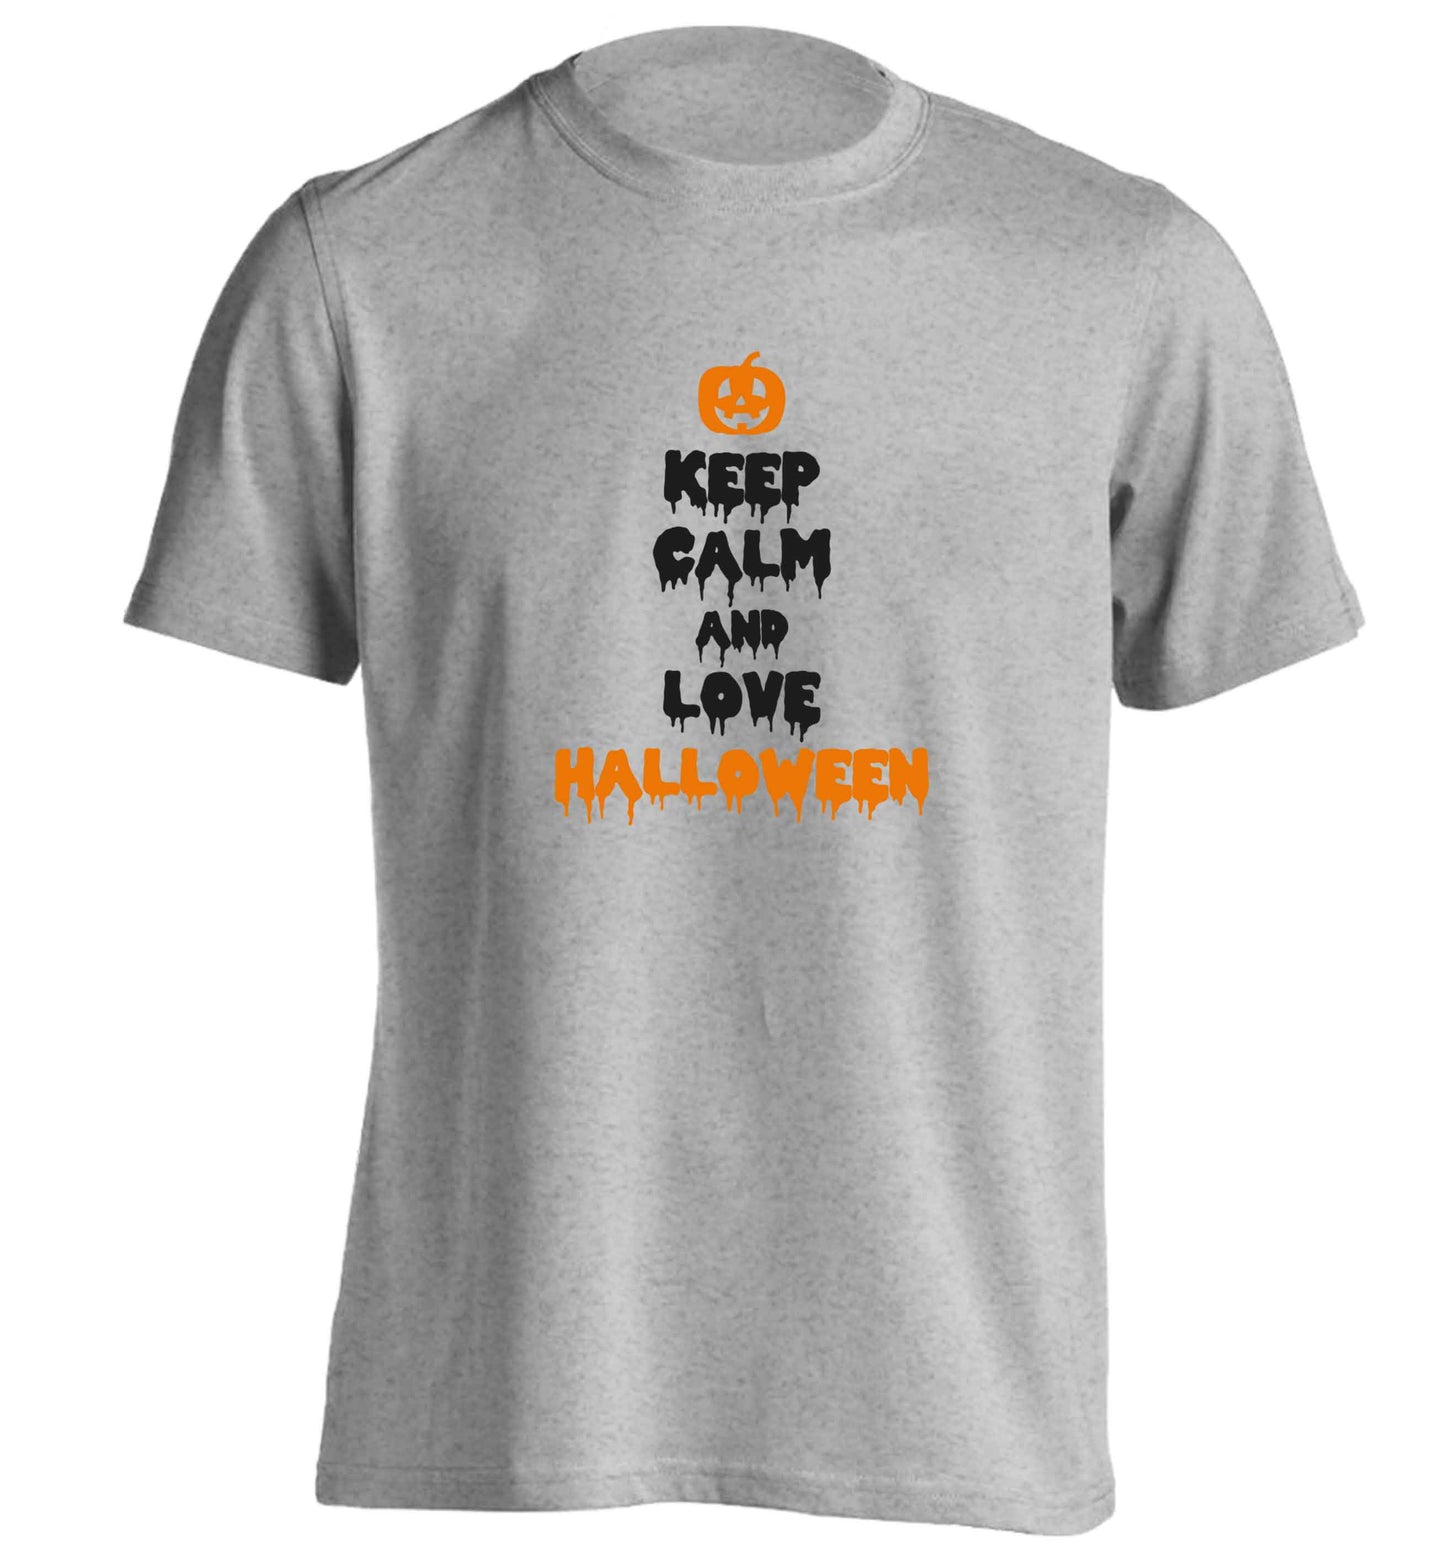 Keep calm and love halloween adults unisex grey Tshirt 2XL